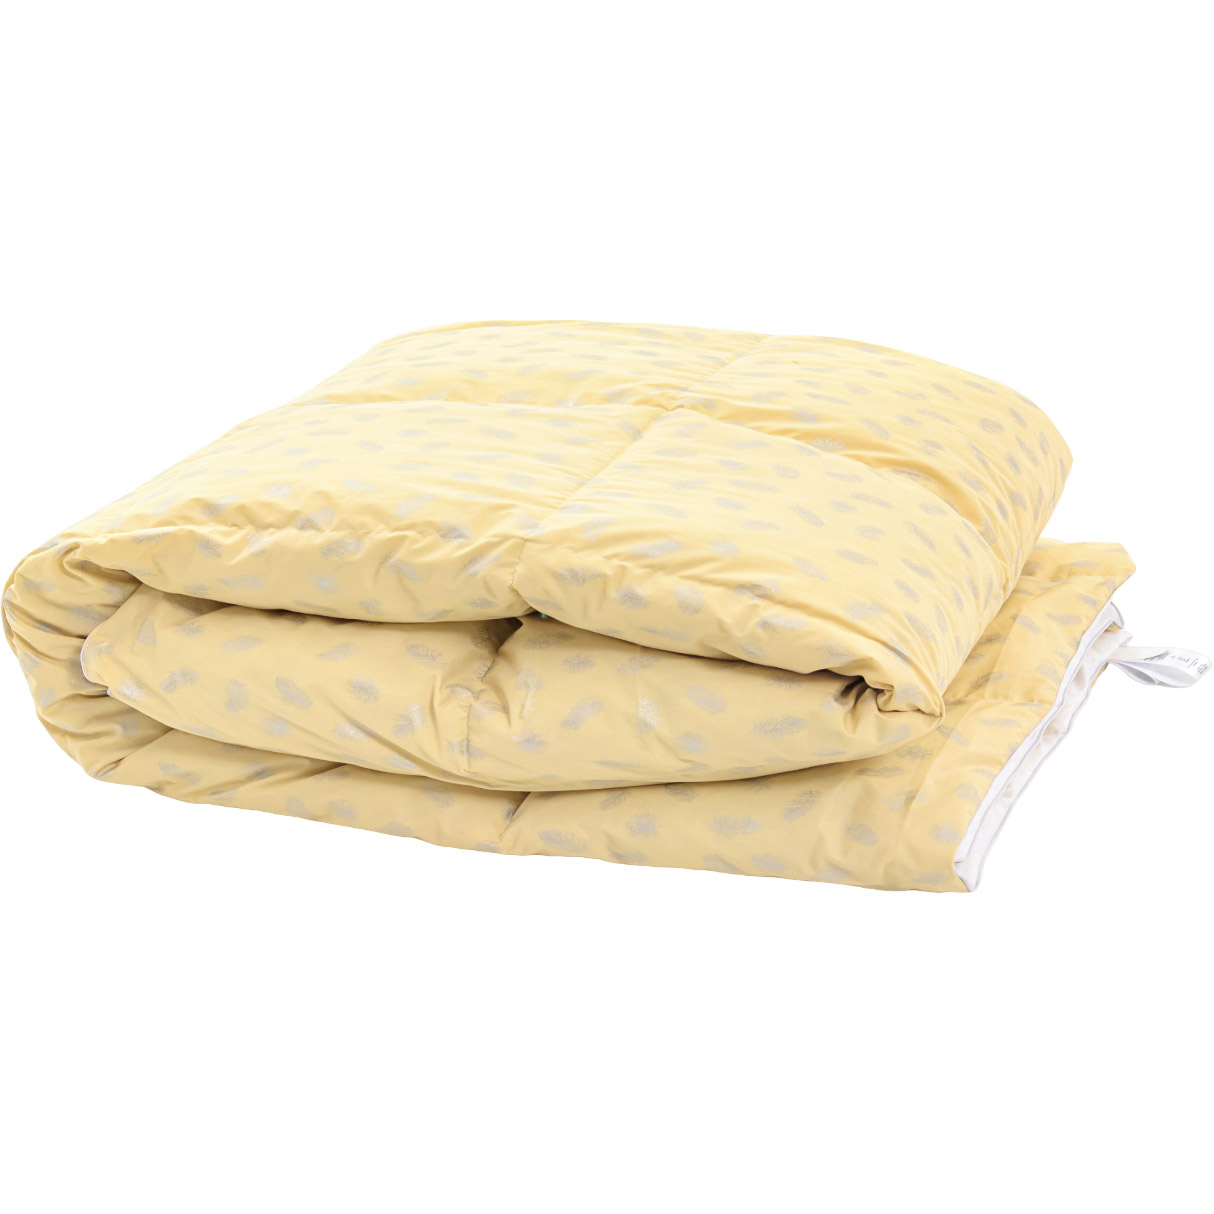 Одеяло пуховое MirSon Karmen №1827 Bio-Beige, 90% пух, king size, 240x220, бежевое (2200003012873) - фото 1